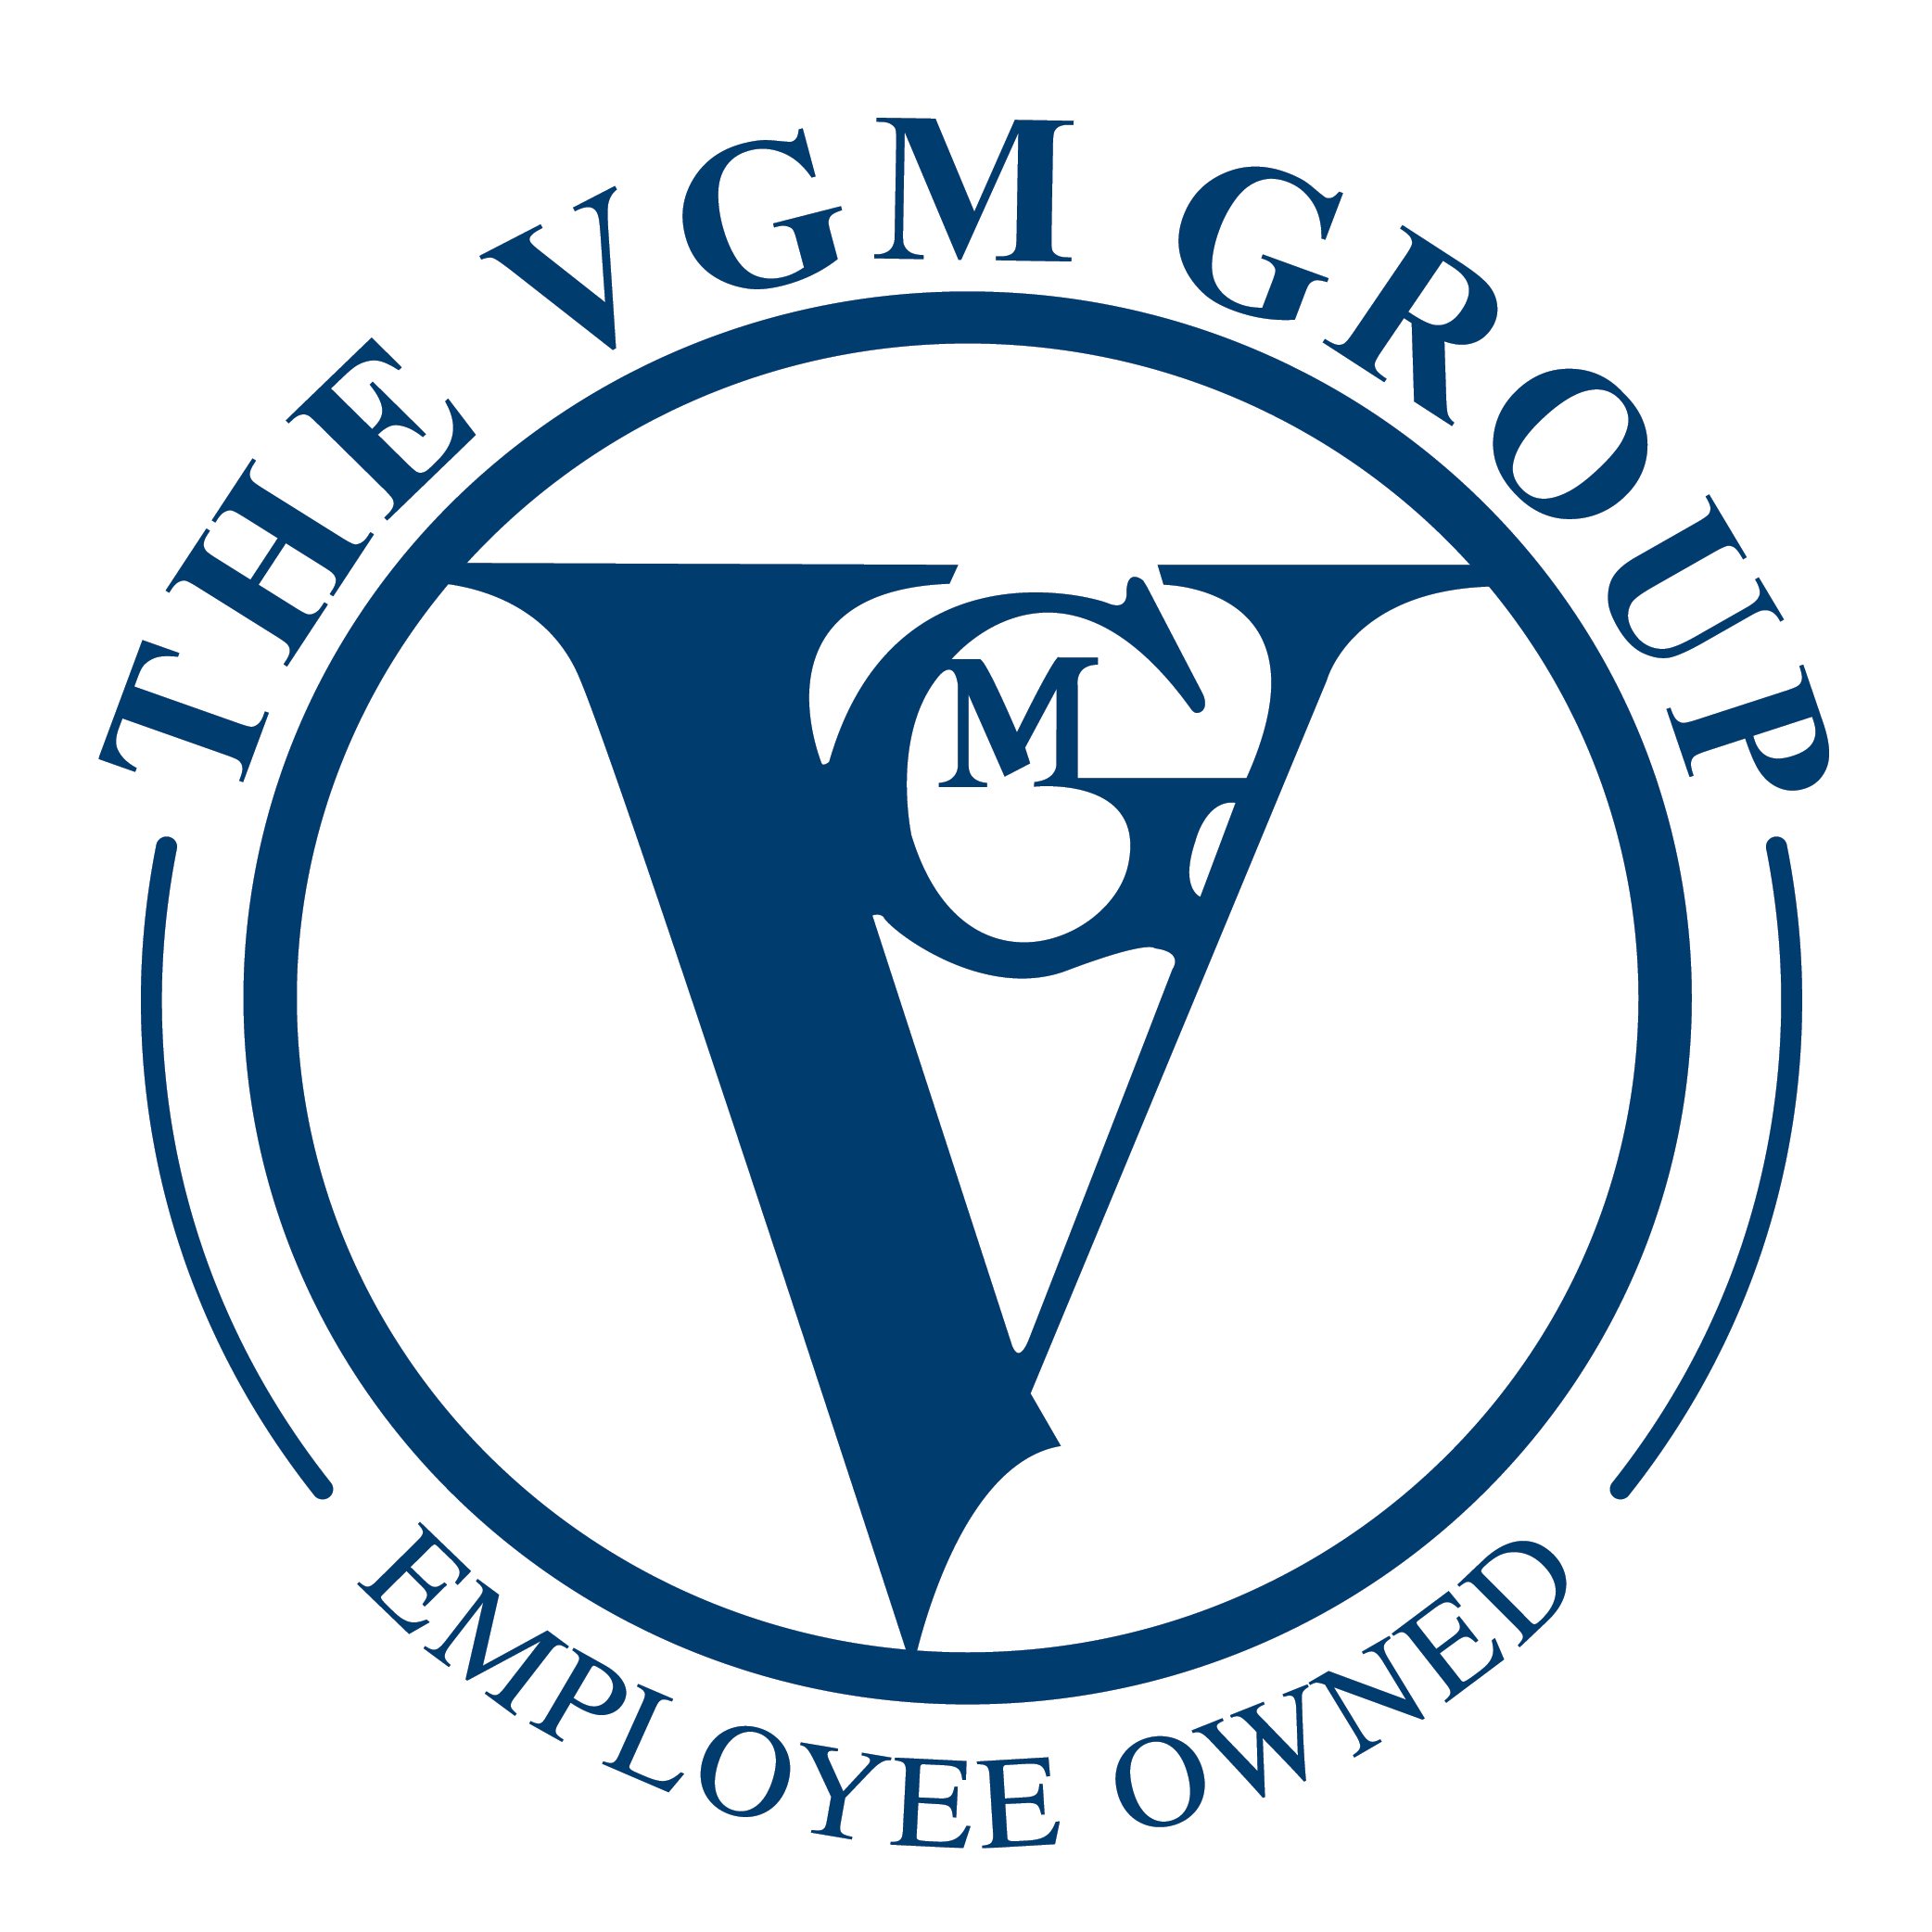 VGM Group-logo.jpg